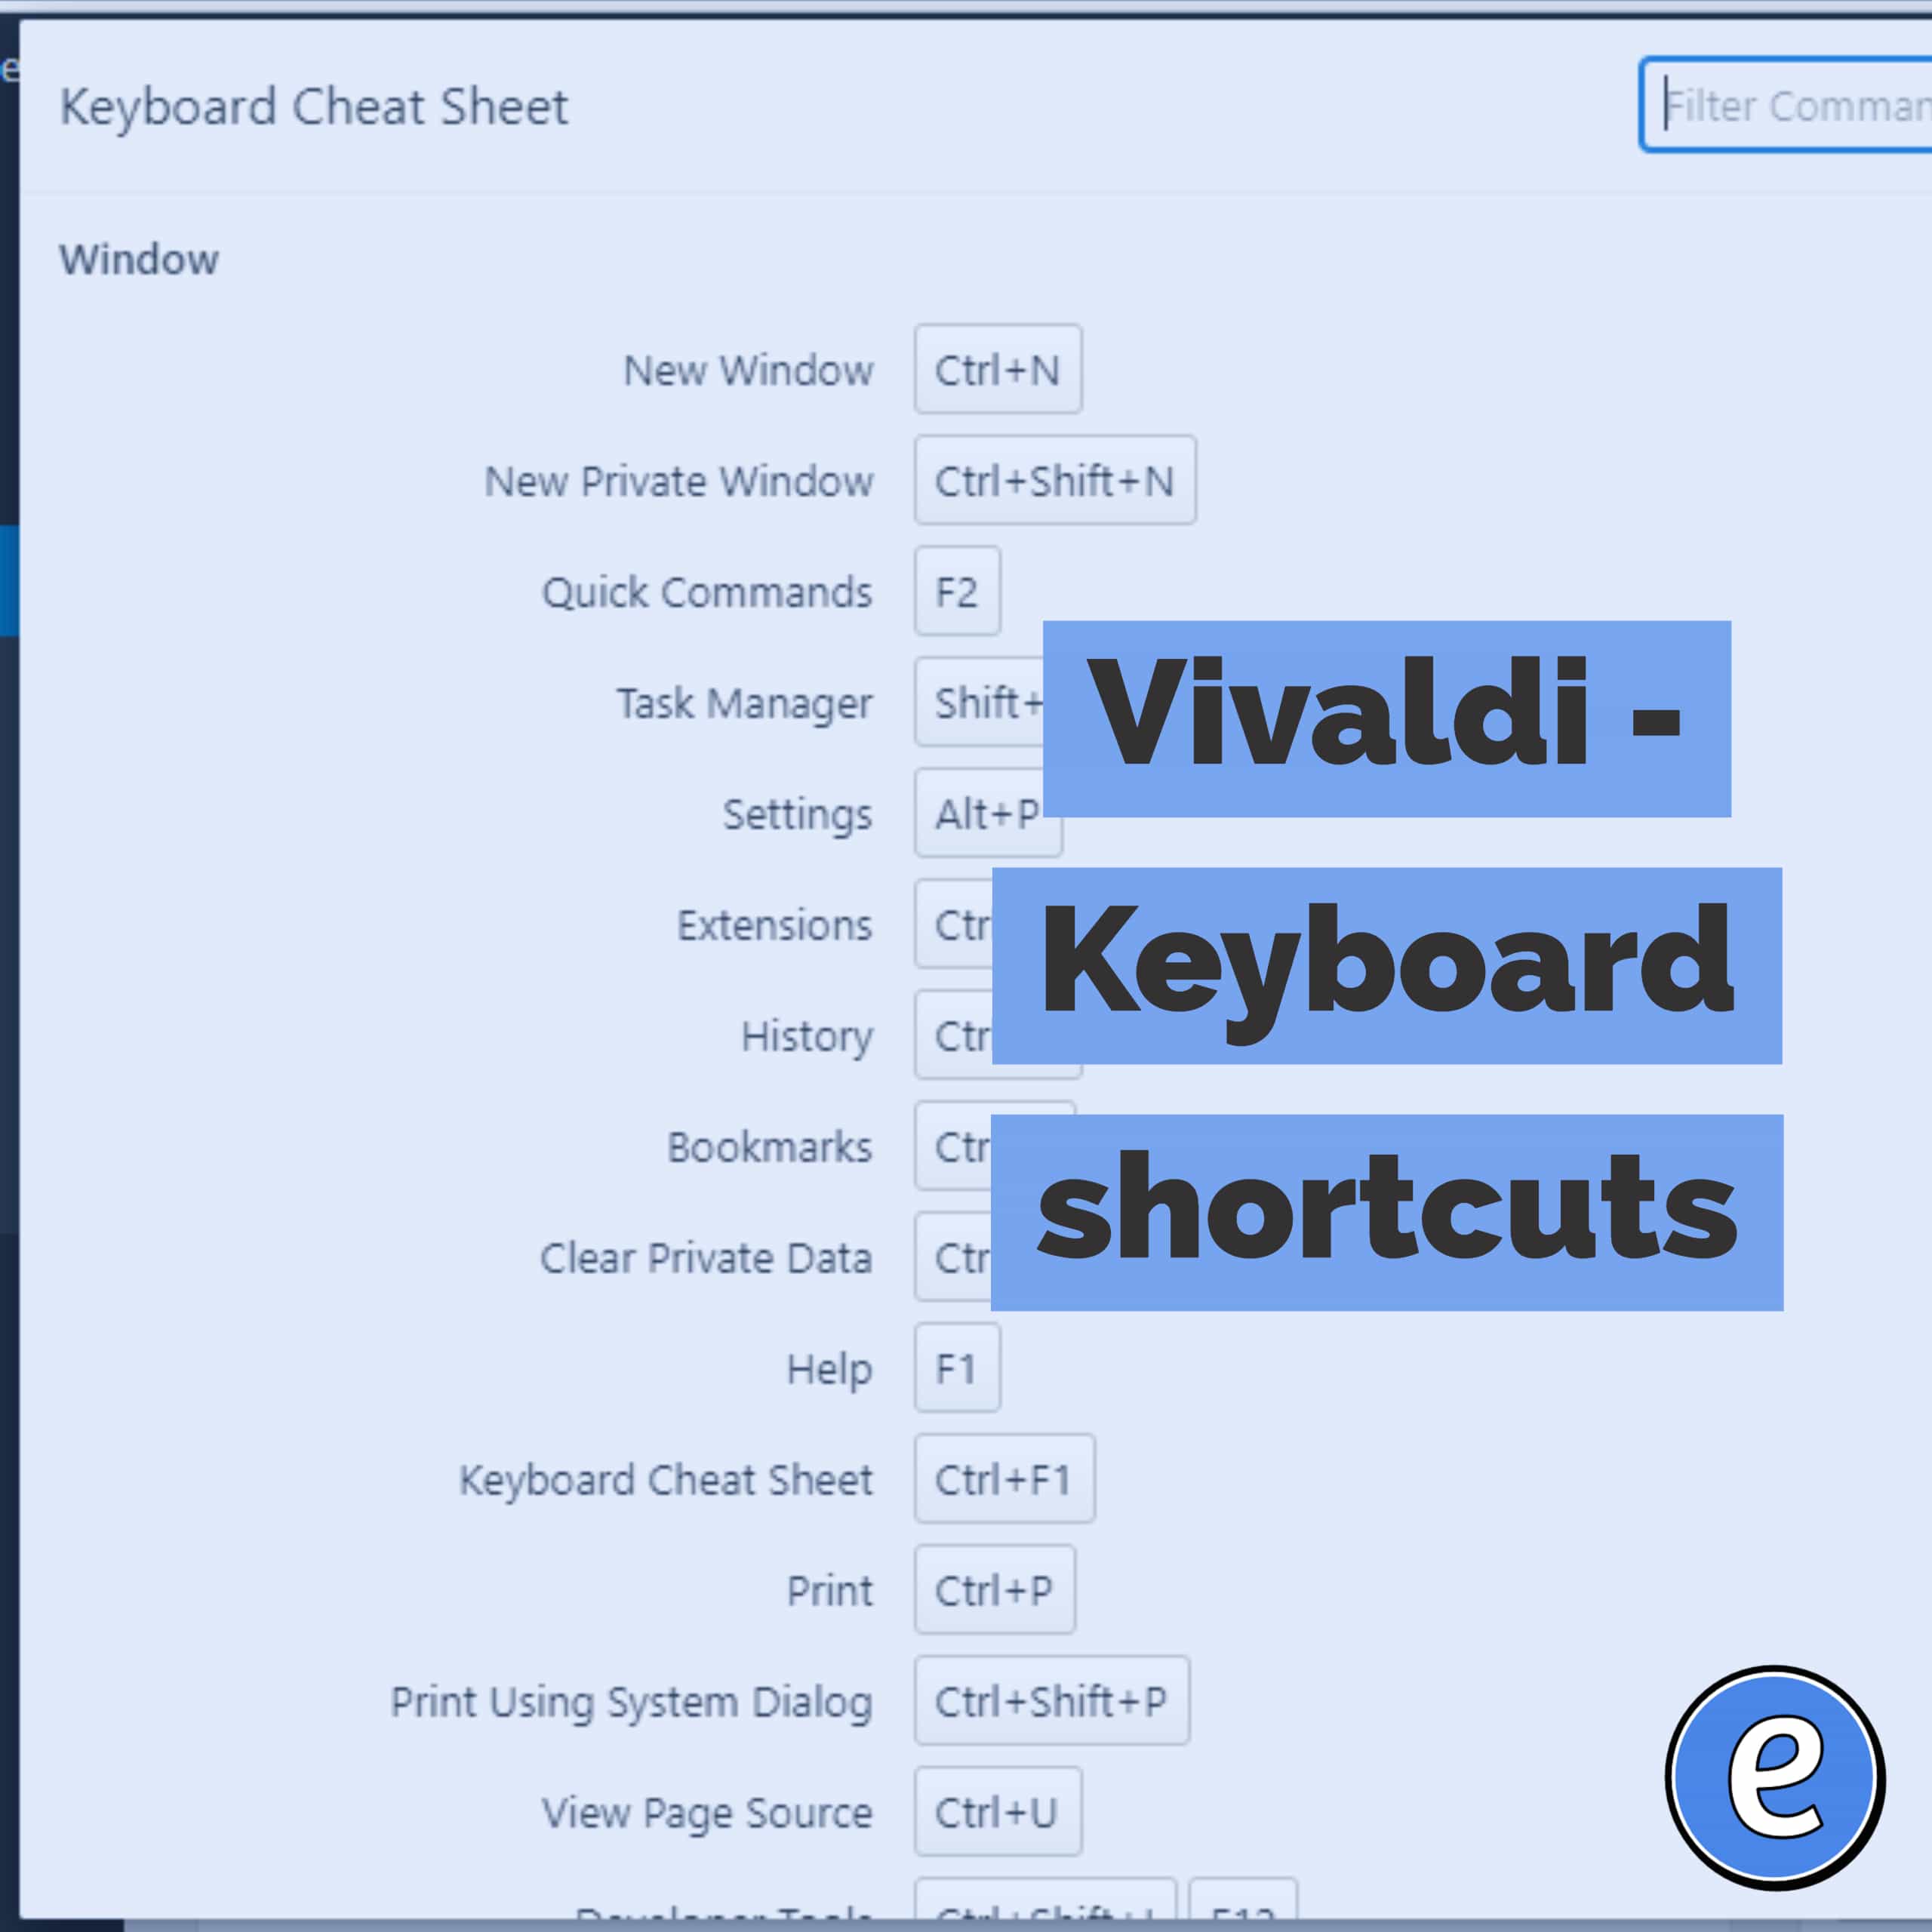 Vivaldi – Keyboard shortcuts